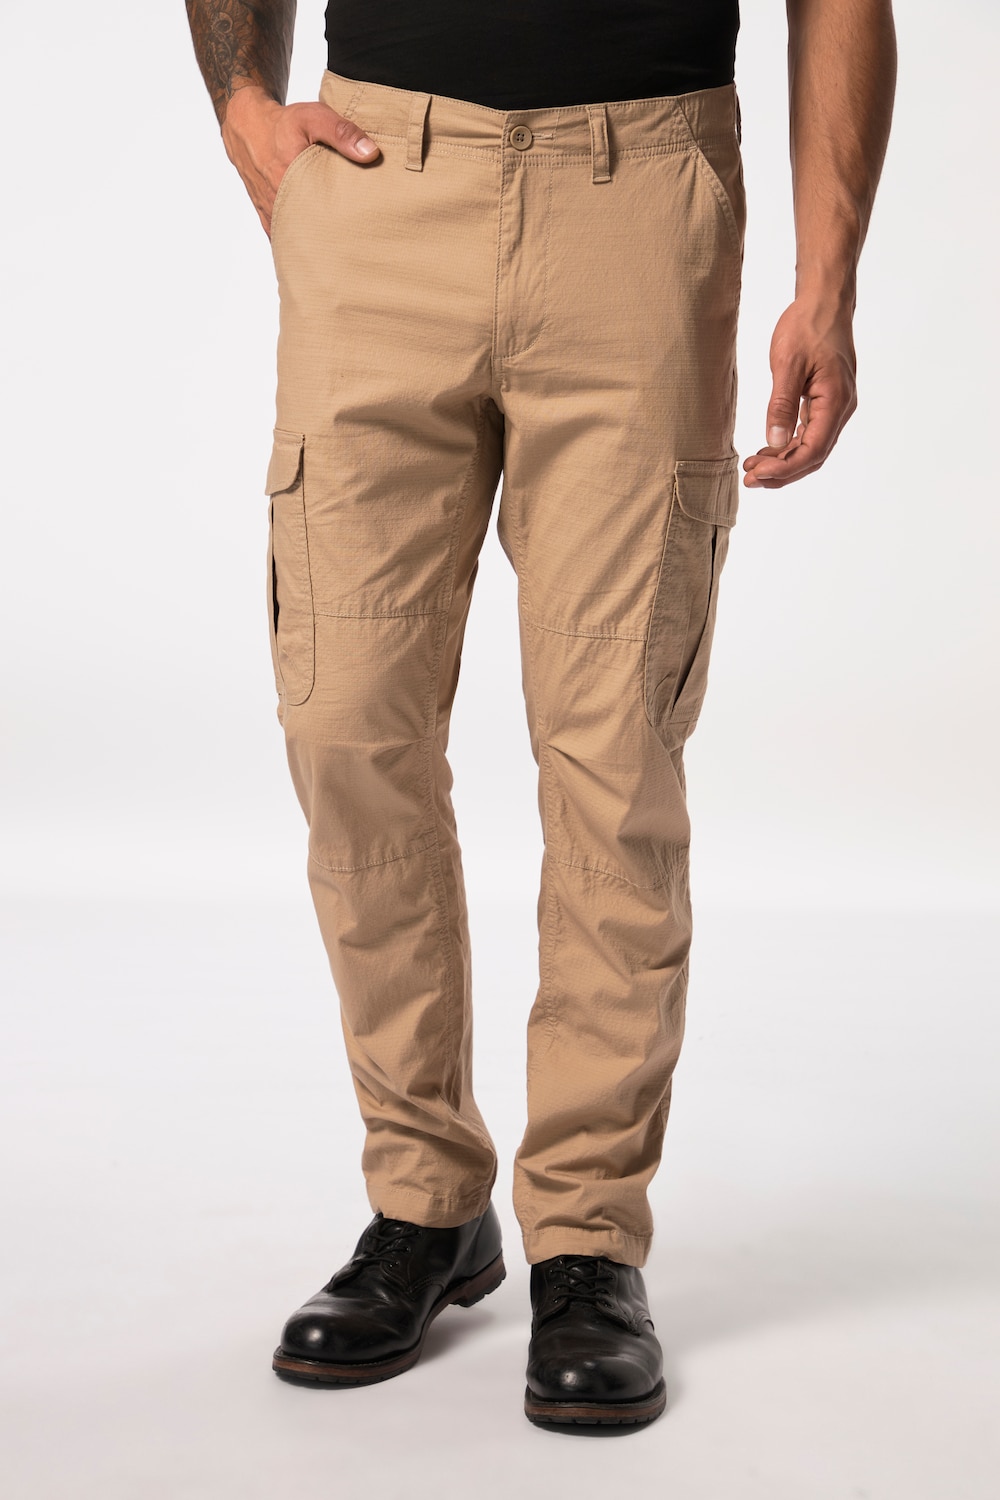 grandes tailles pantalon cargo flexnamic® en ripstop, hommes, marron, taille: 64, coton, jp1880